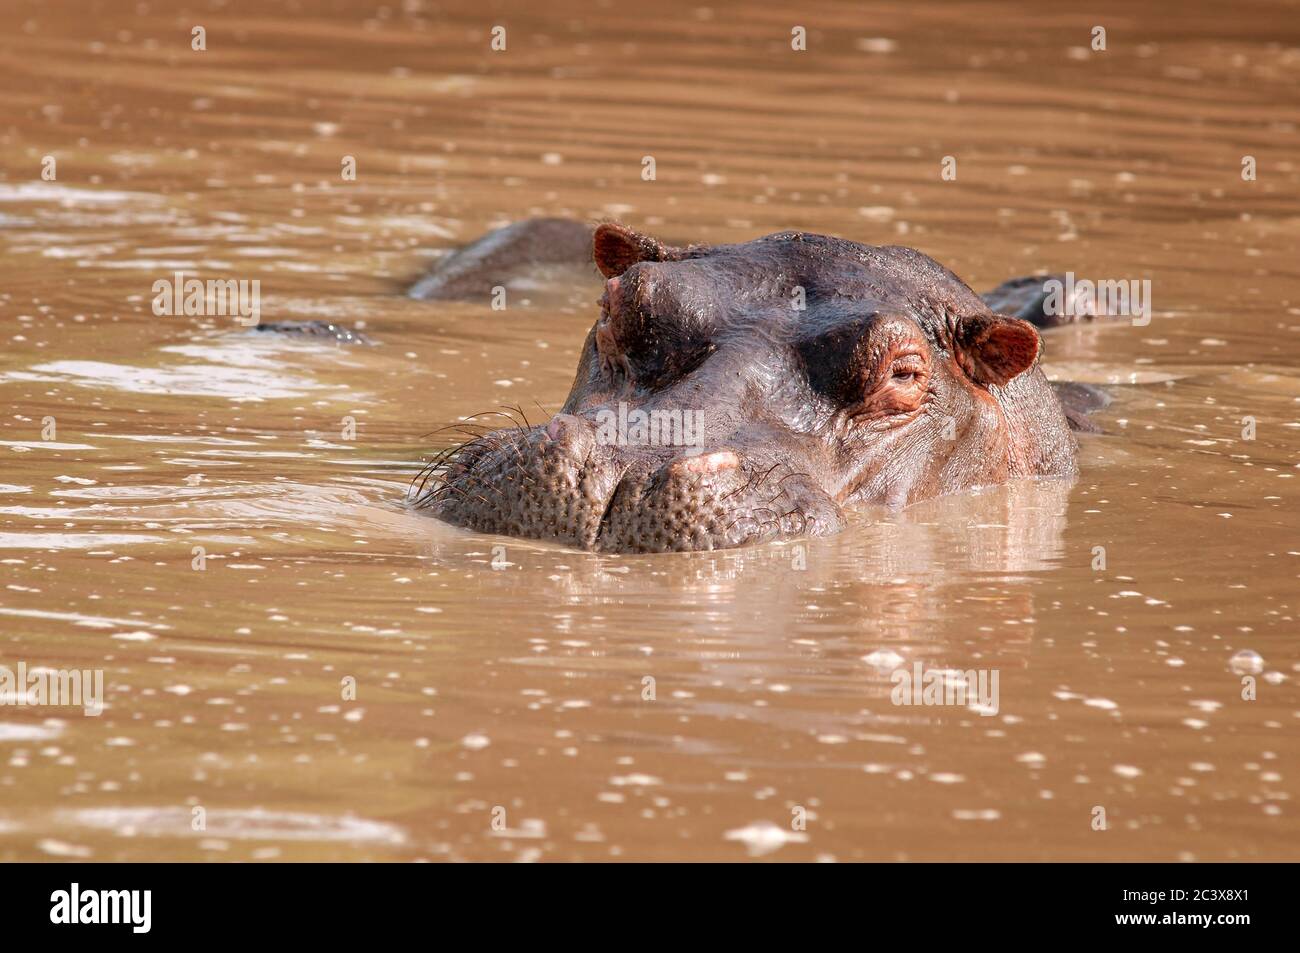 Common hippopotamu, Hippopotamus amphibius, resting in water in hippo pool. Masai Mara National Reserve. Kenya. Africa. Stock Photo